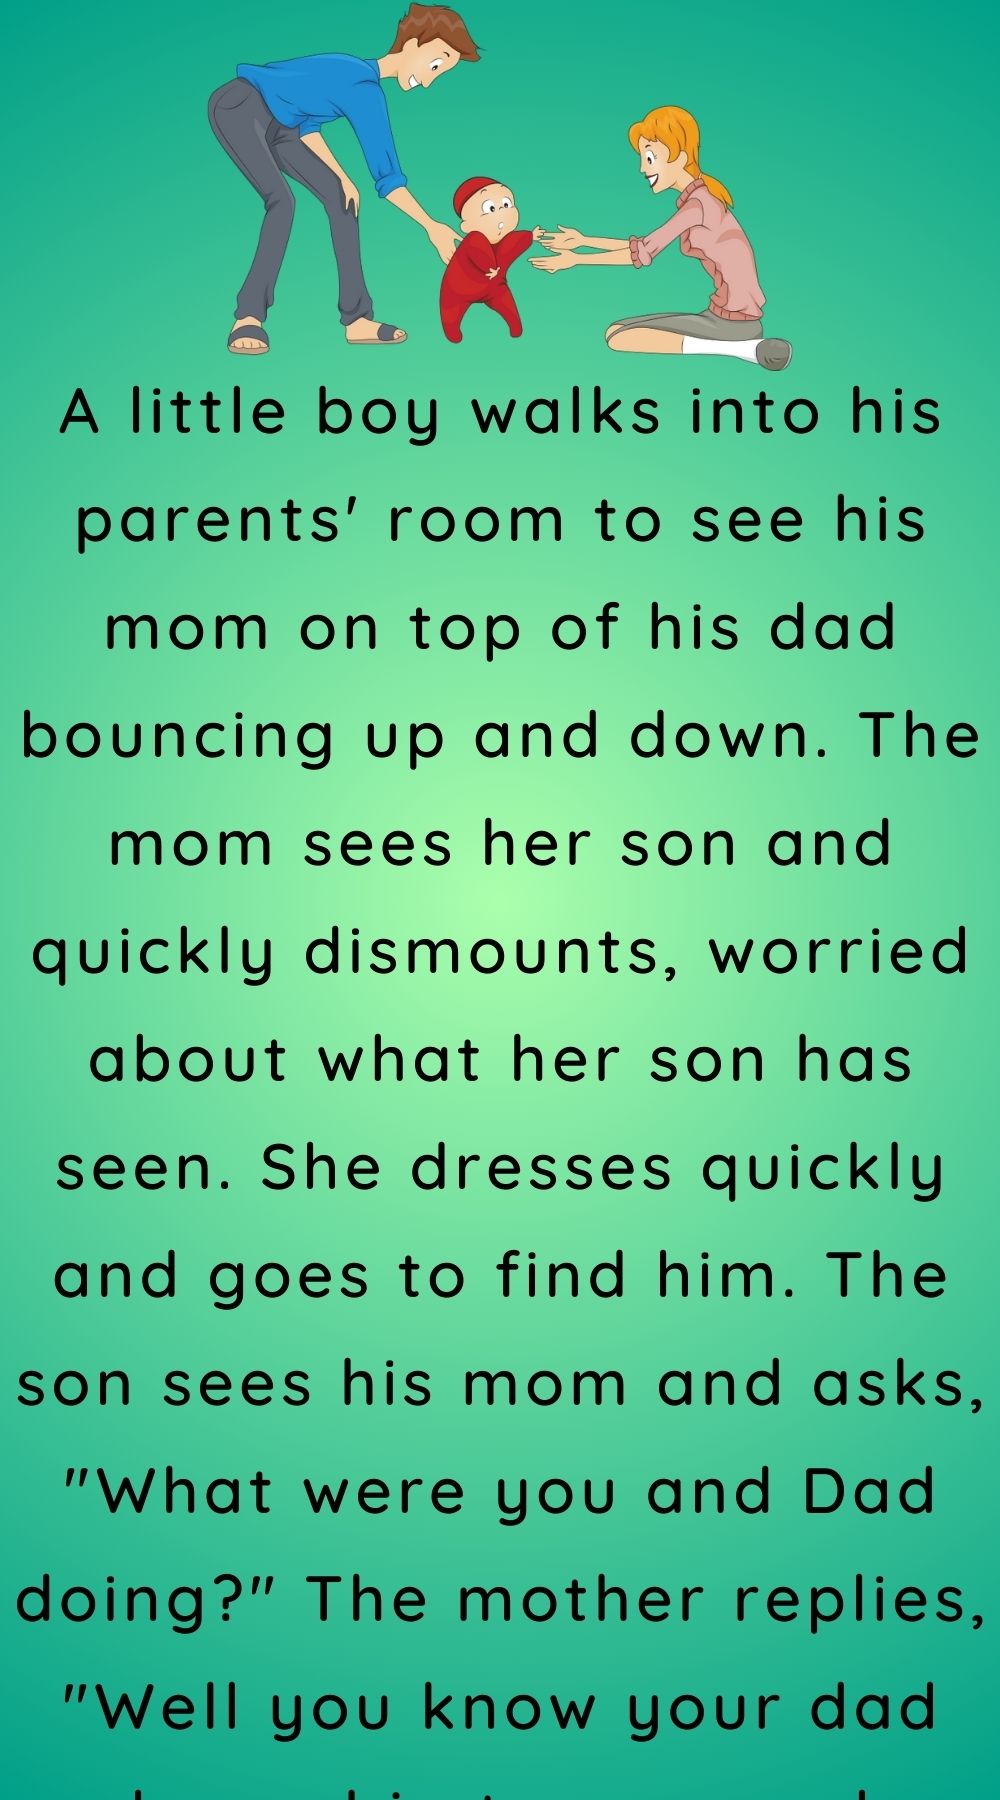 A little boy walks into his parents room